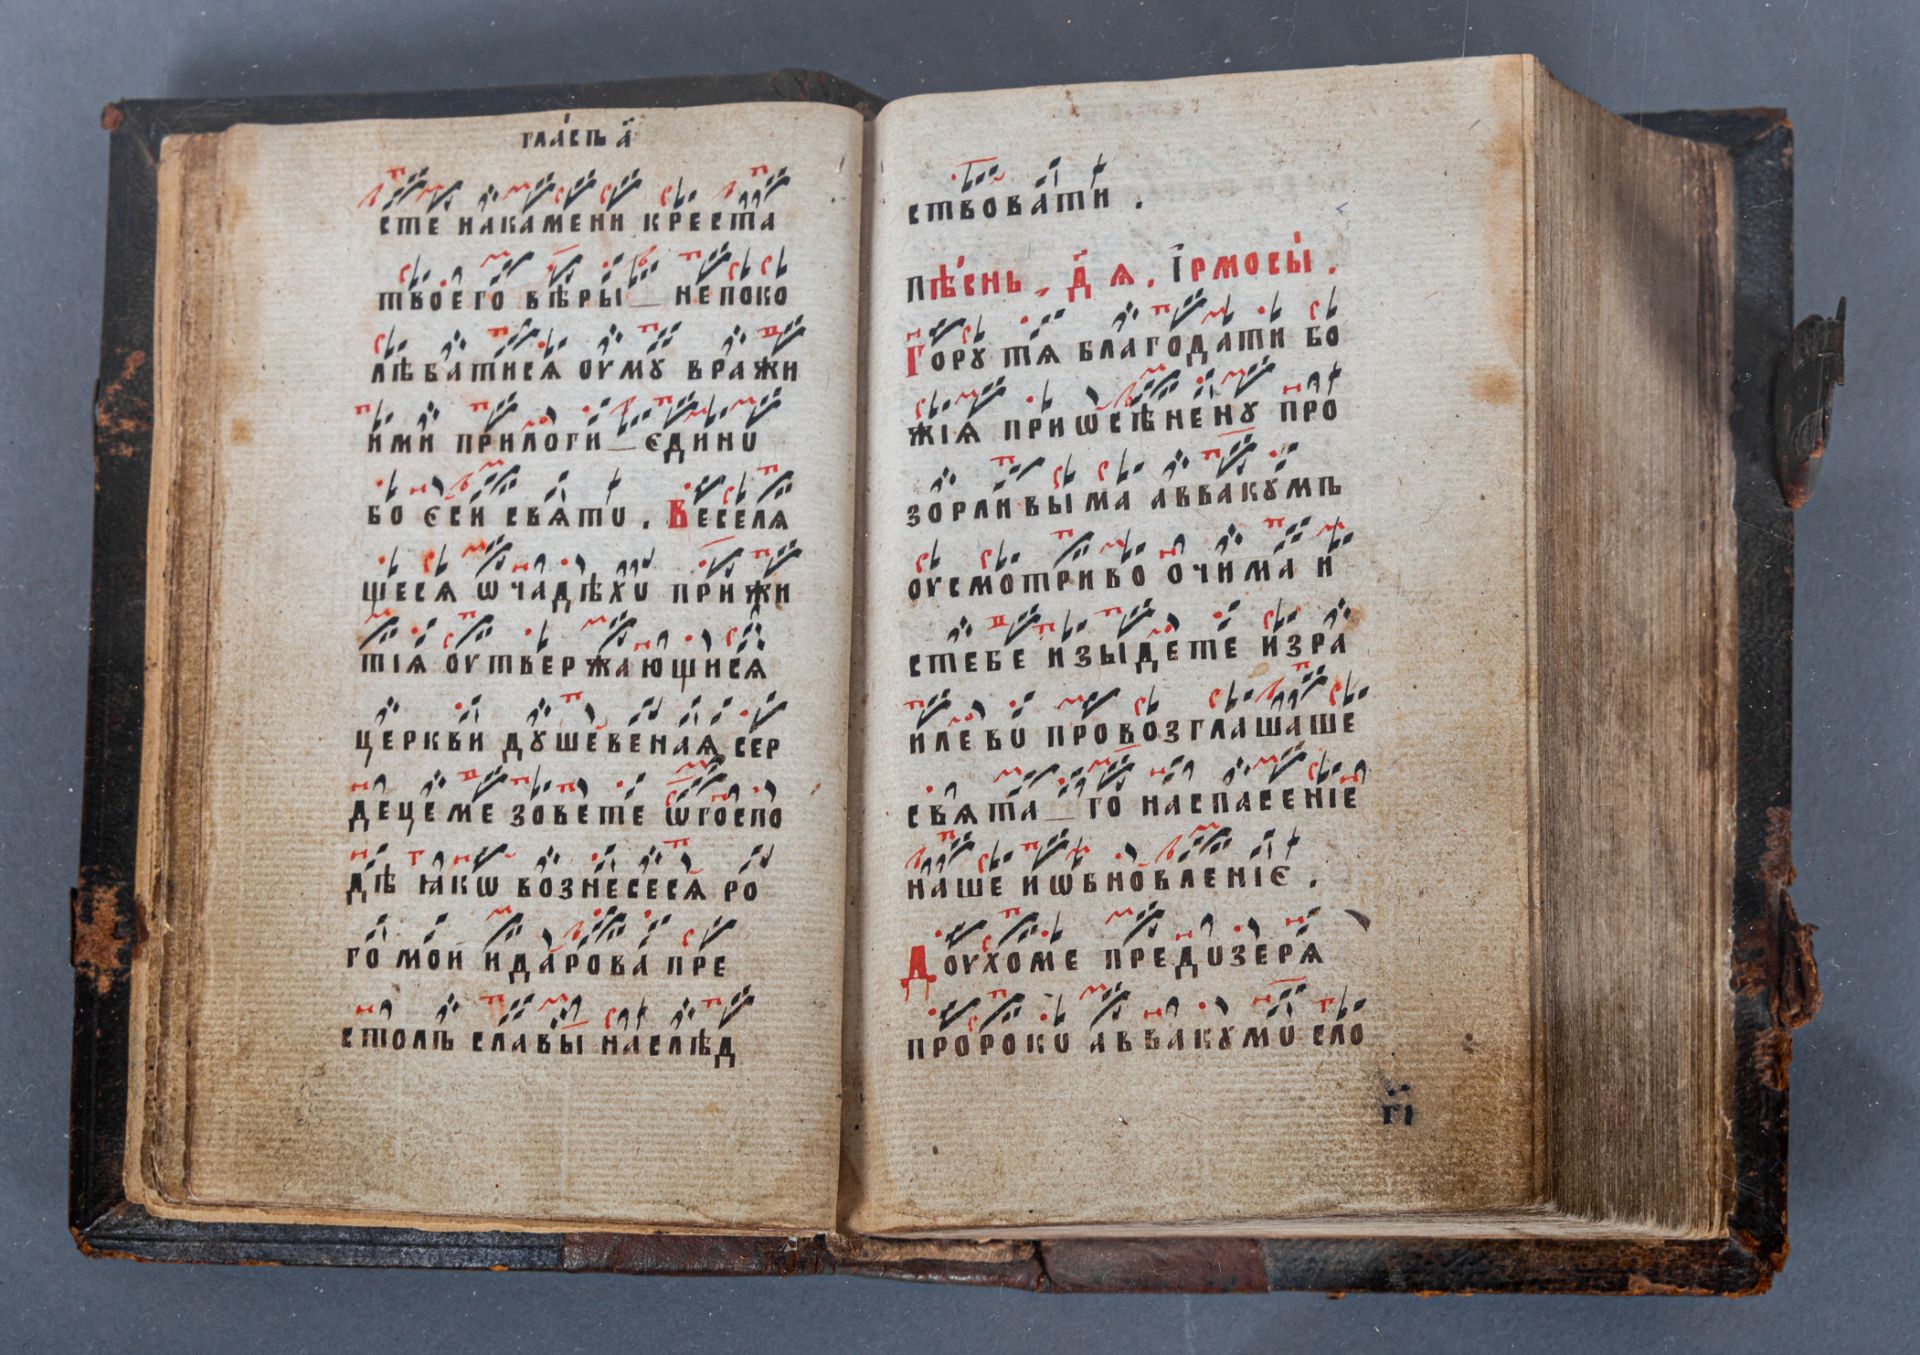 Gregorianisches Gesangbuch, wohl 19. Jh. - Image 2 of 4